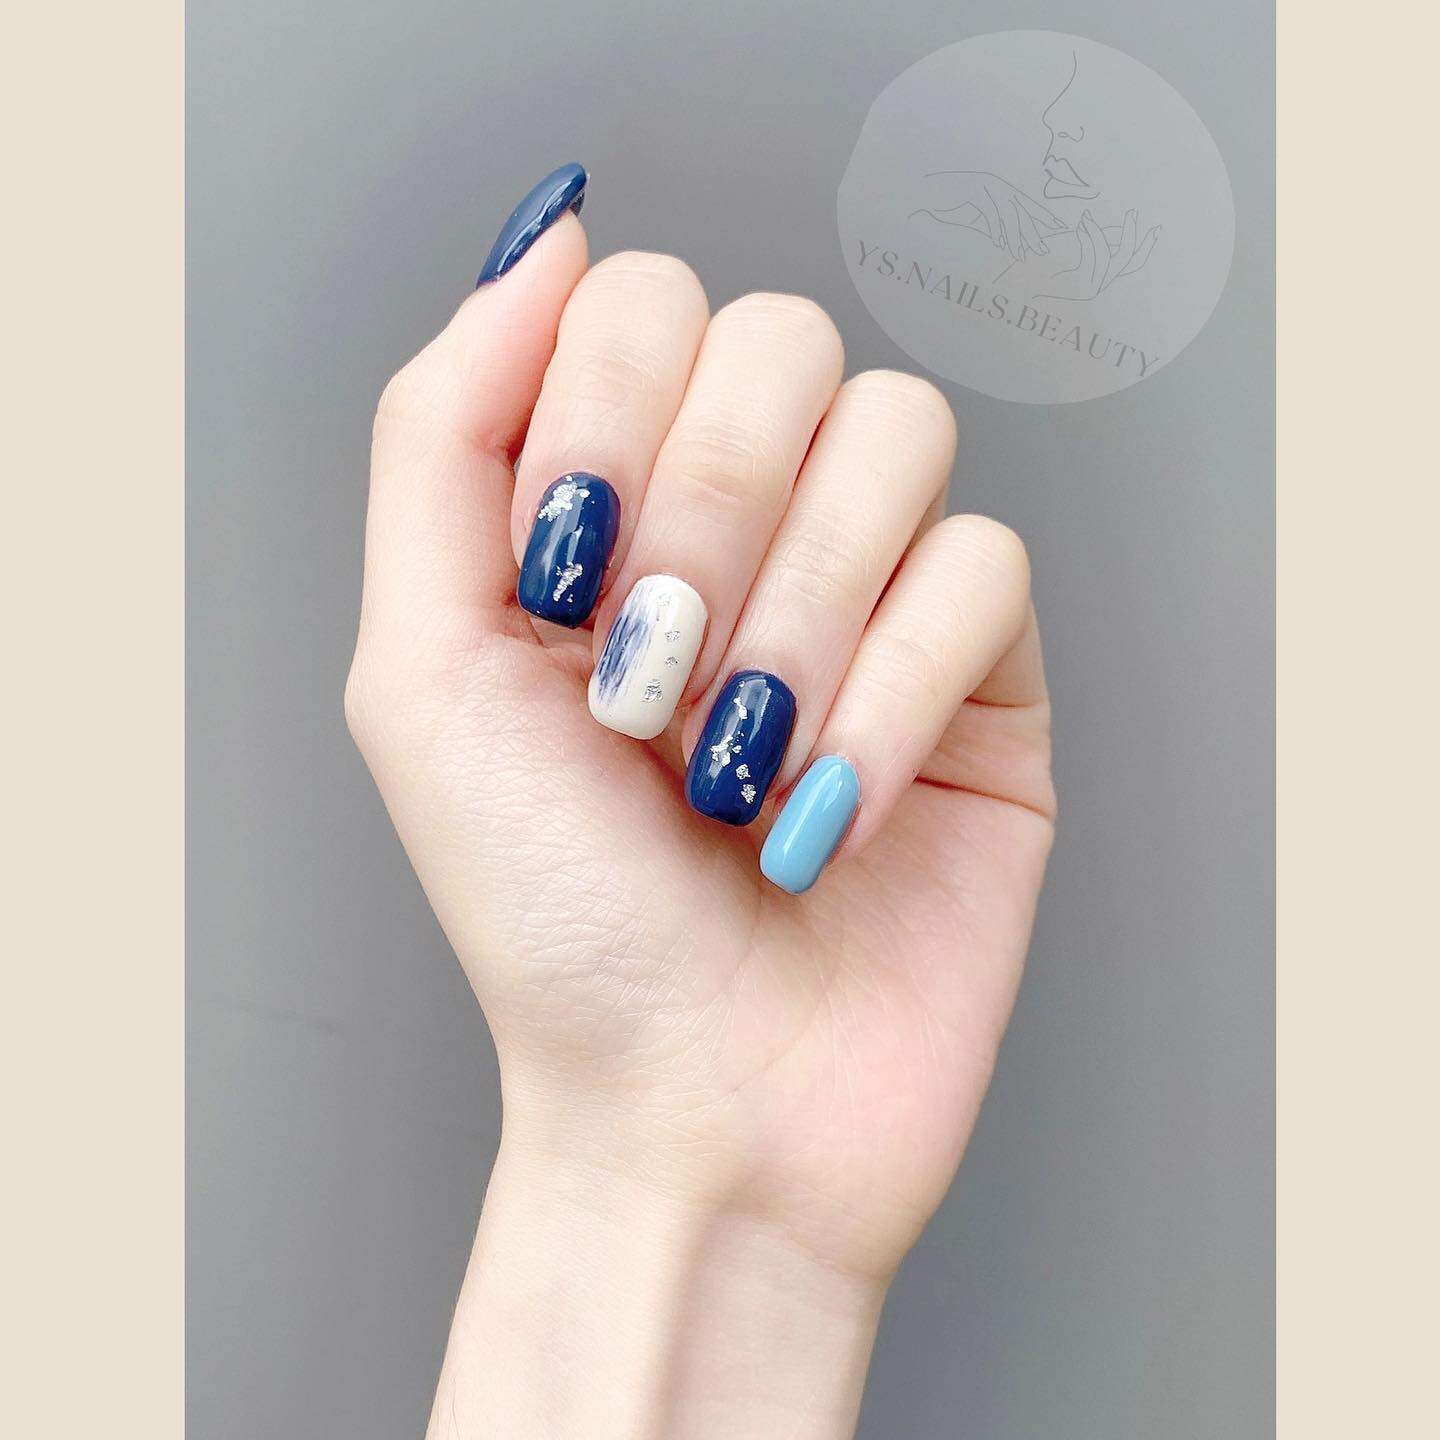 Gel甲店推介1. ys.nails.beauty